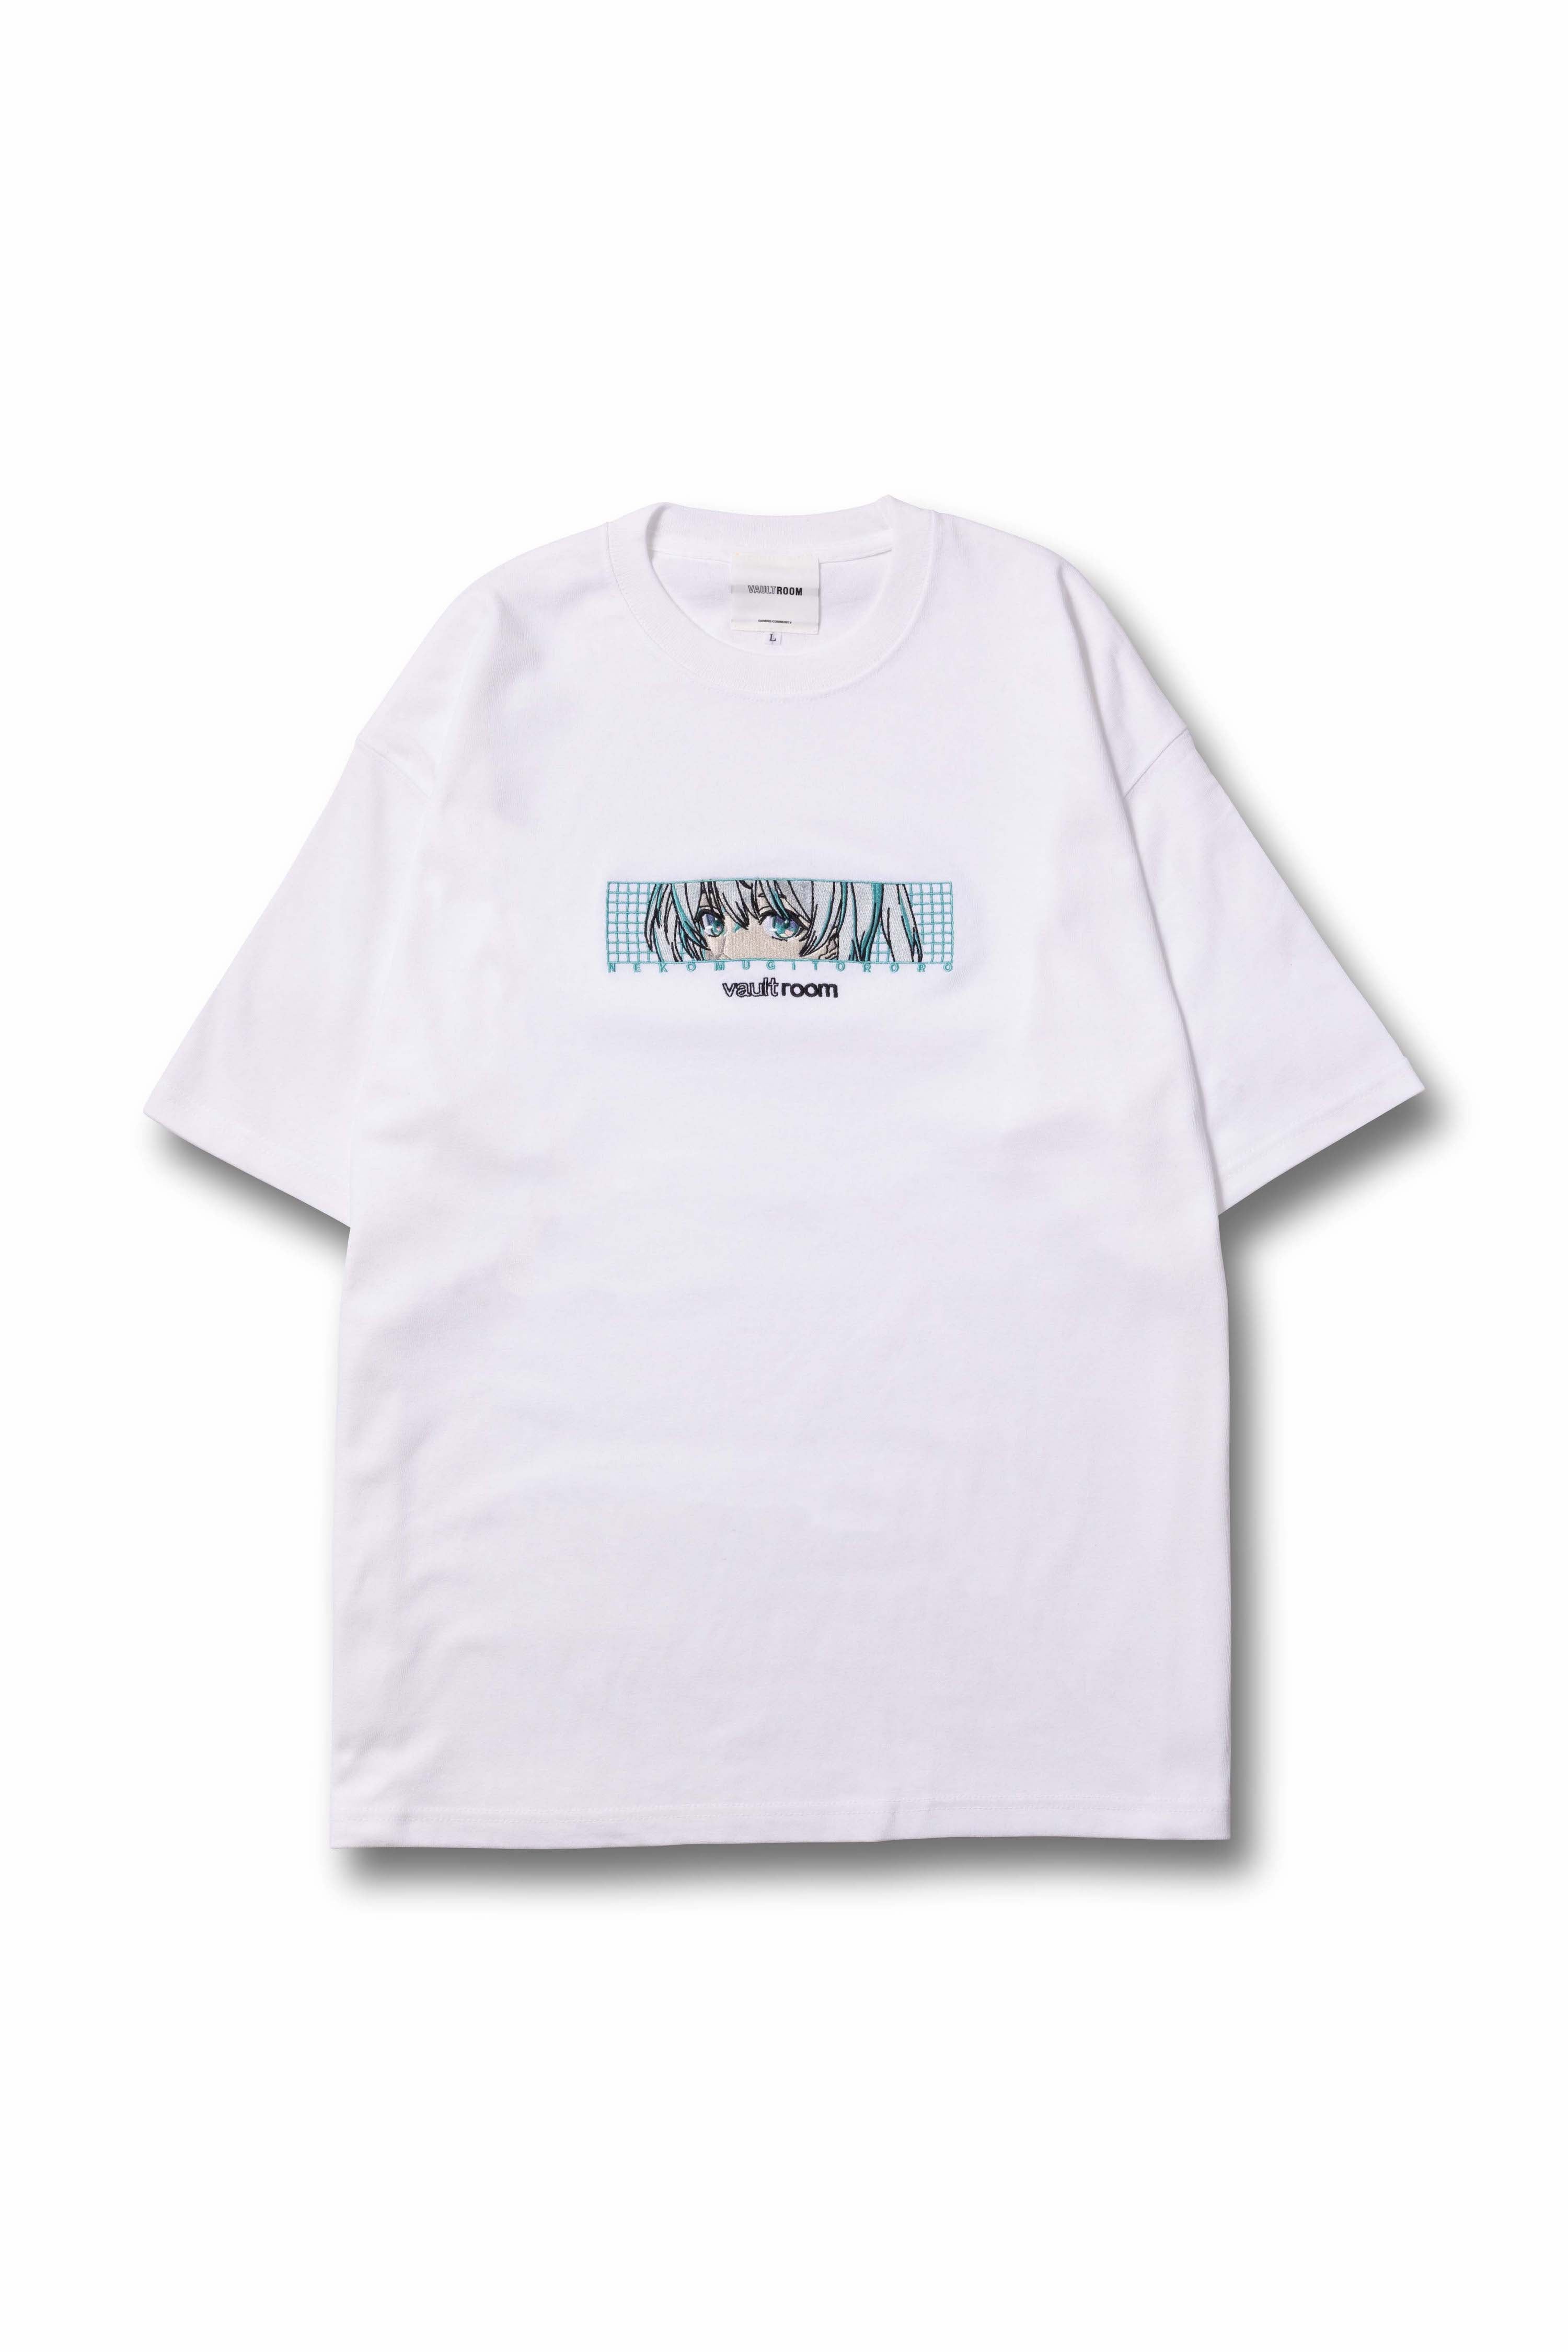 Vaultroom × NEKOMUGI TORORO TEE / WHT - Tシャツ/カットソー(半袖/袖